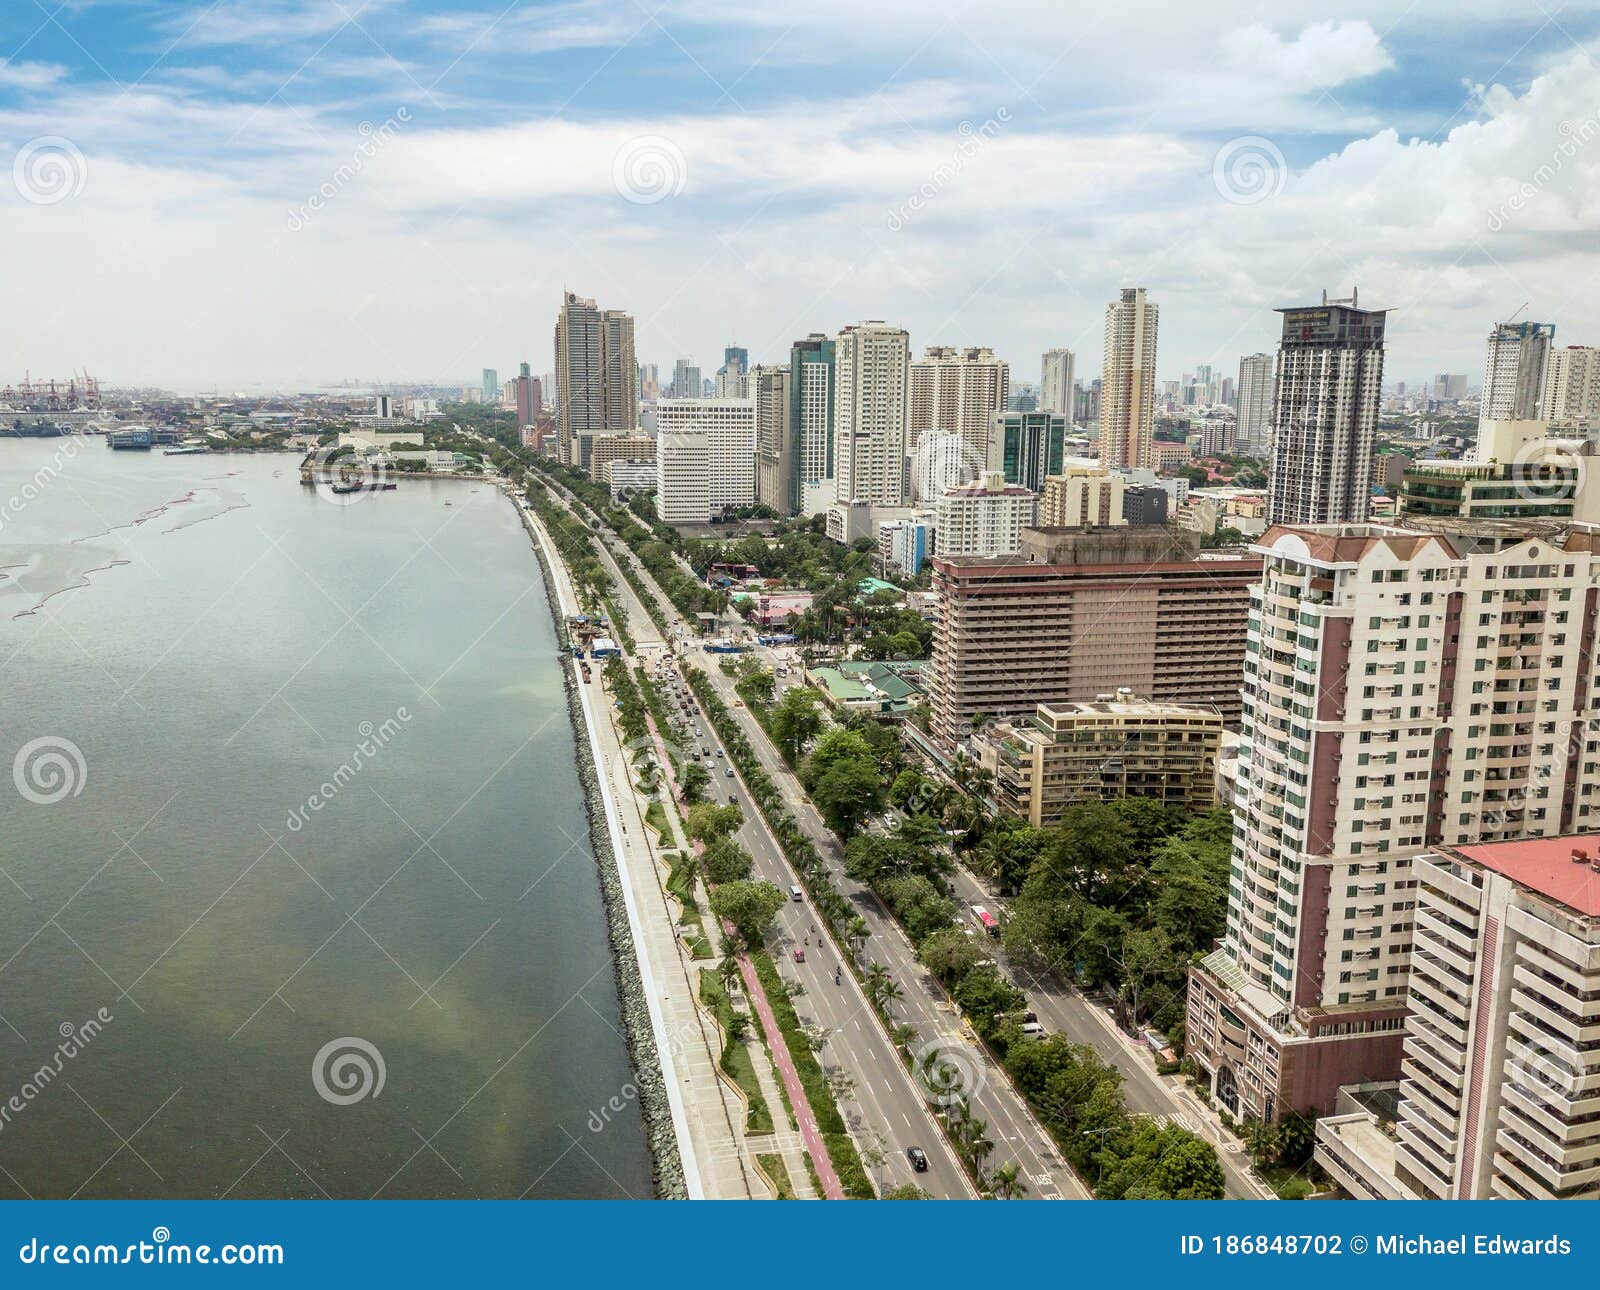 manila, philippines - roxas boulevard, manila skyline and manila bay. tall residential condominiums line the famous